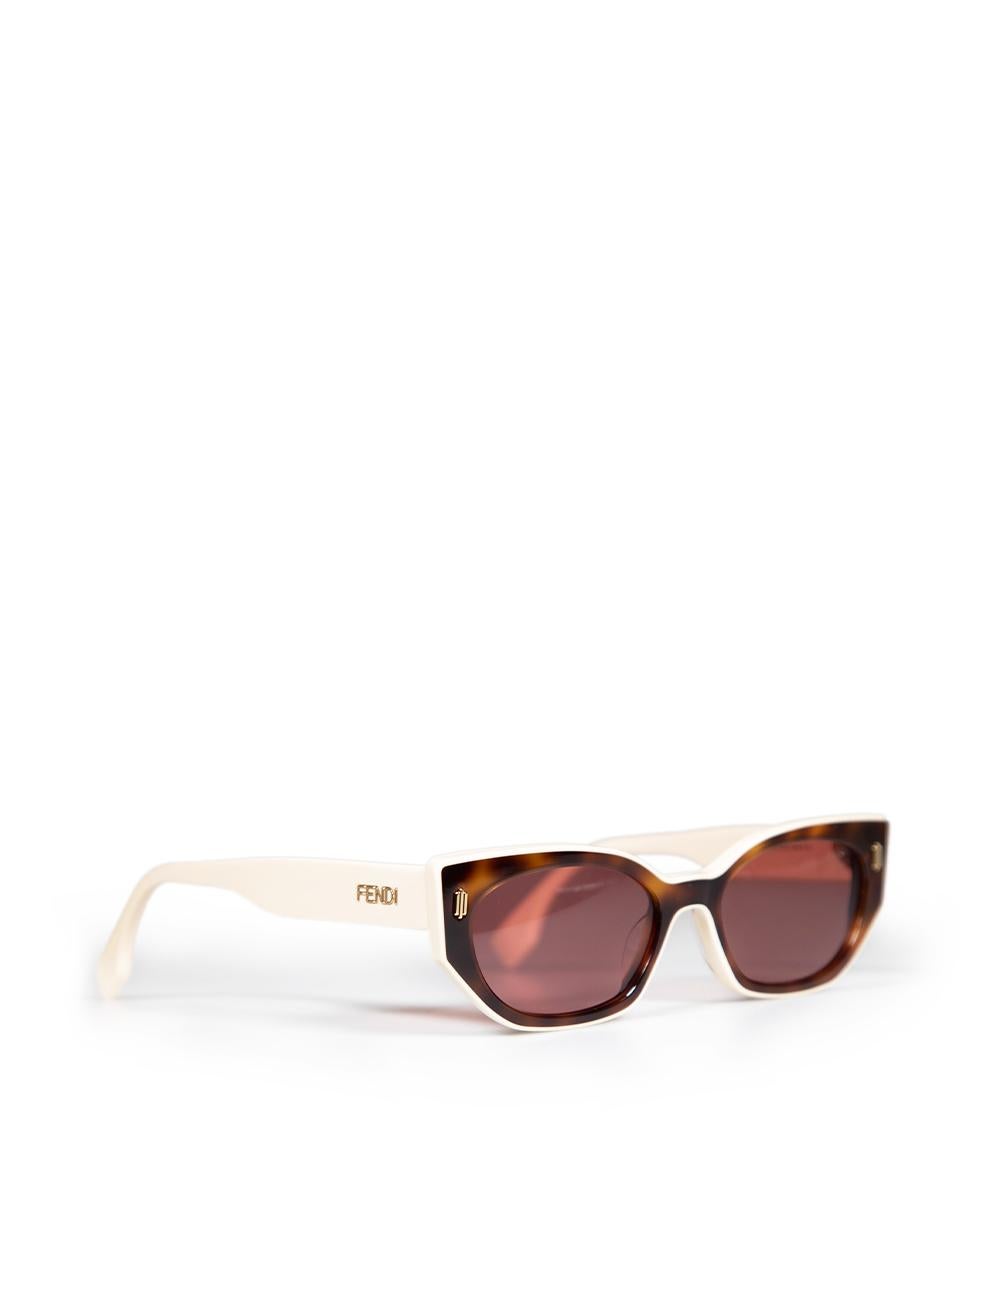 Fendi Blonde Havana Tortoiseshell Sunglasses In New Condition For Sale In London, GB